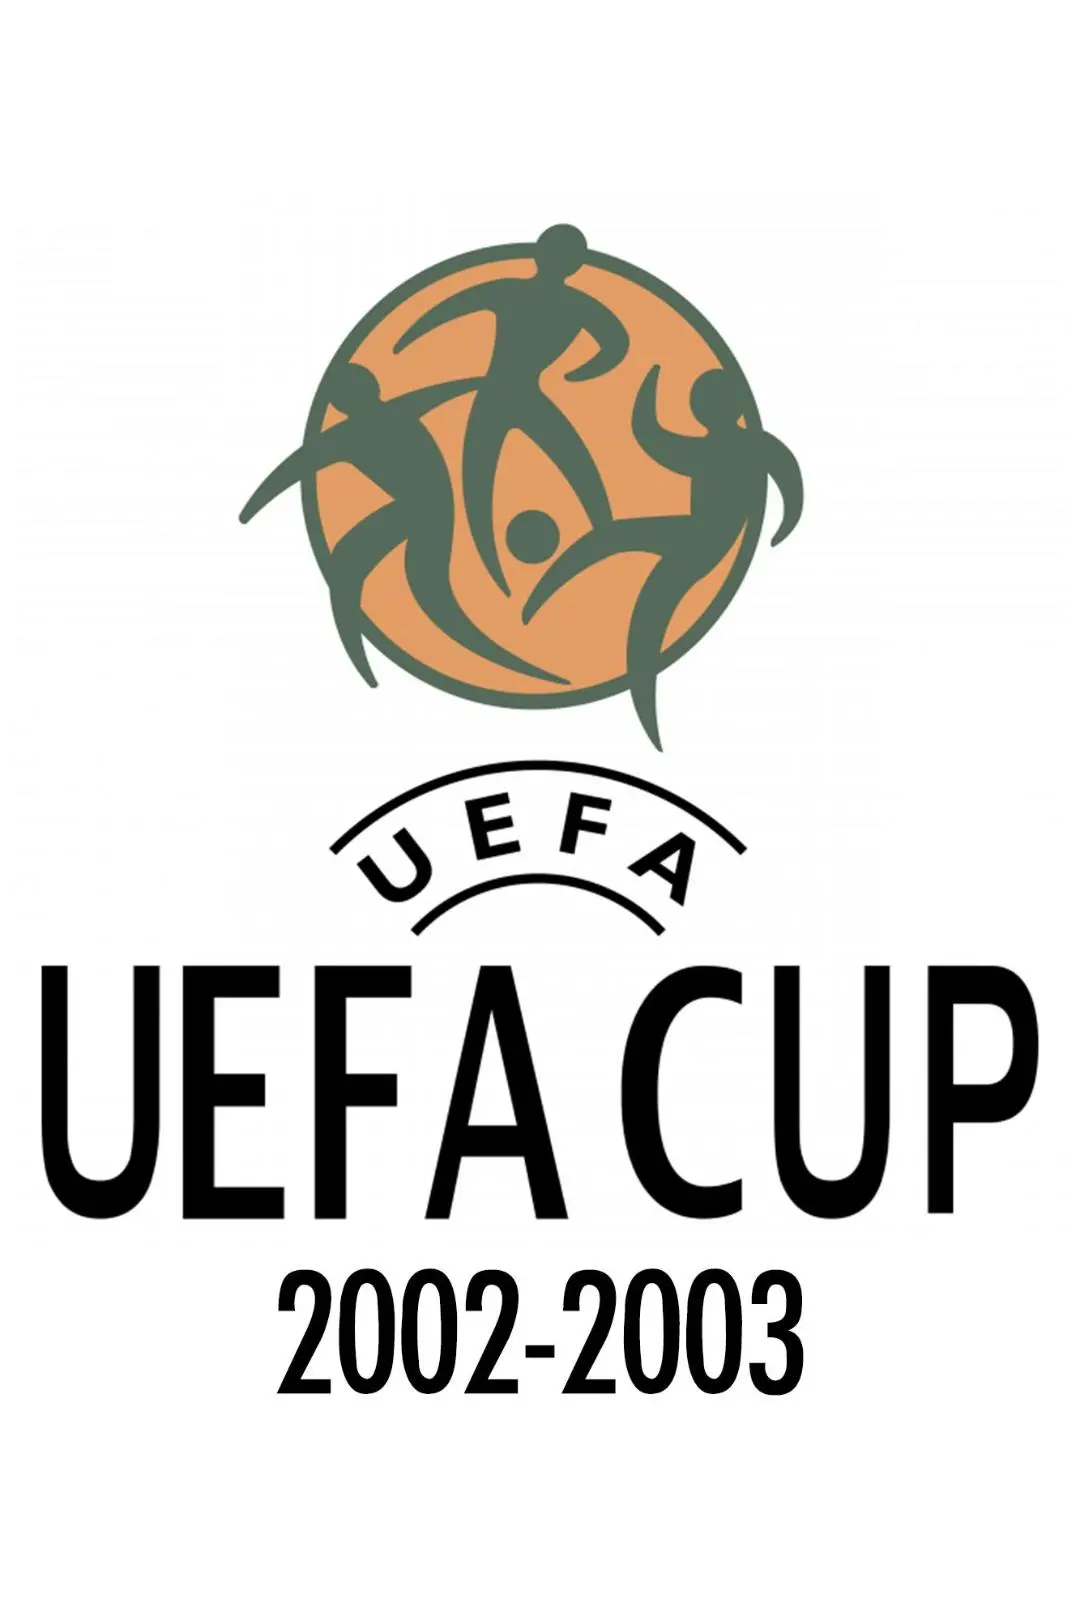 2002-2003 UEFA Cup_peliplat